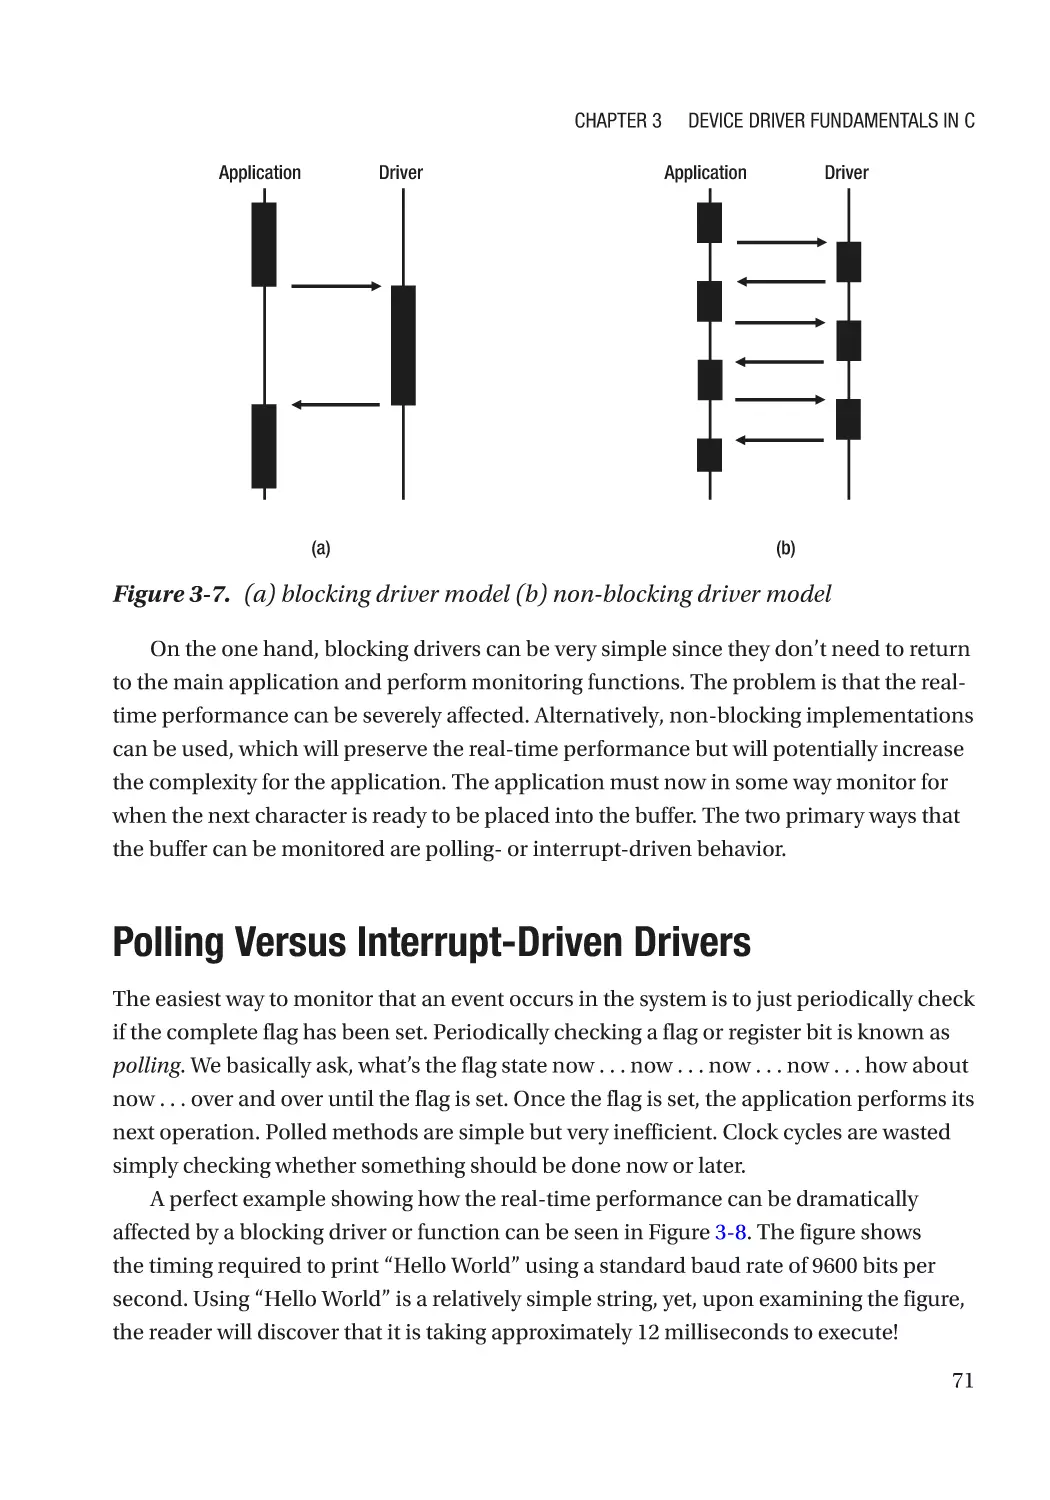 Polling Versus Interrupt-Driven Drivers